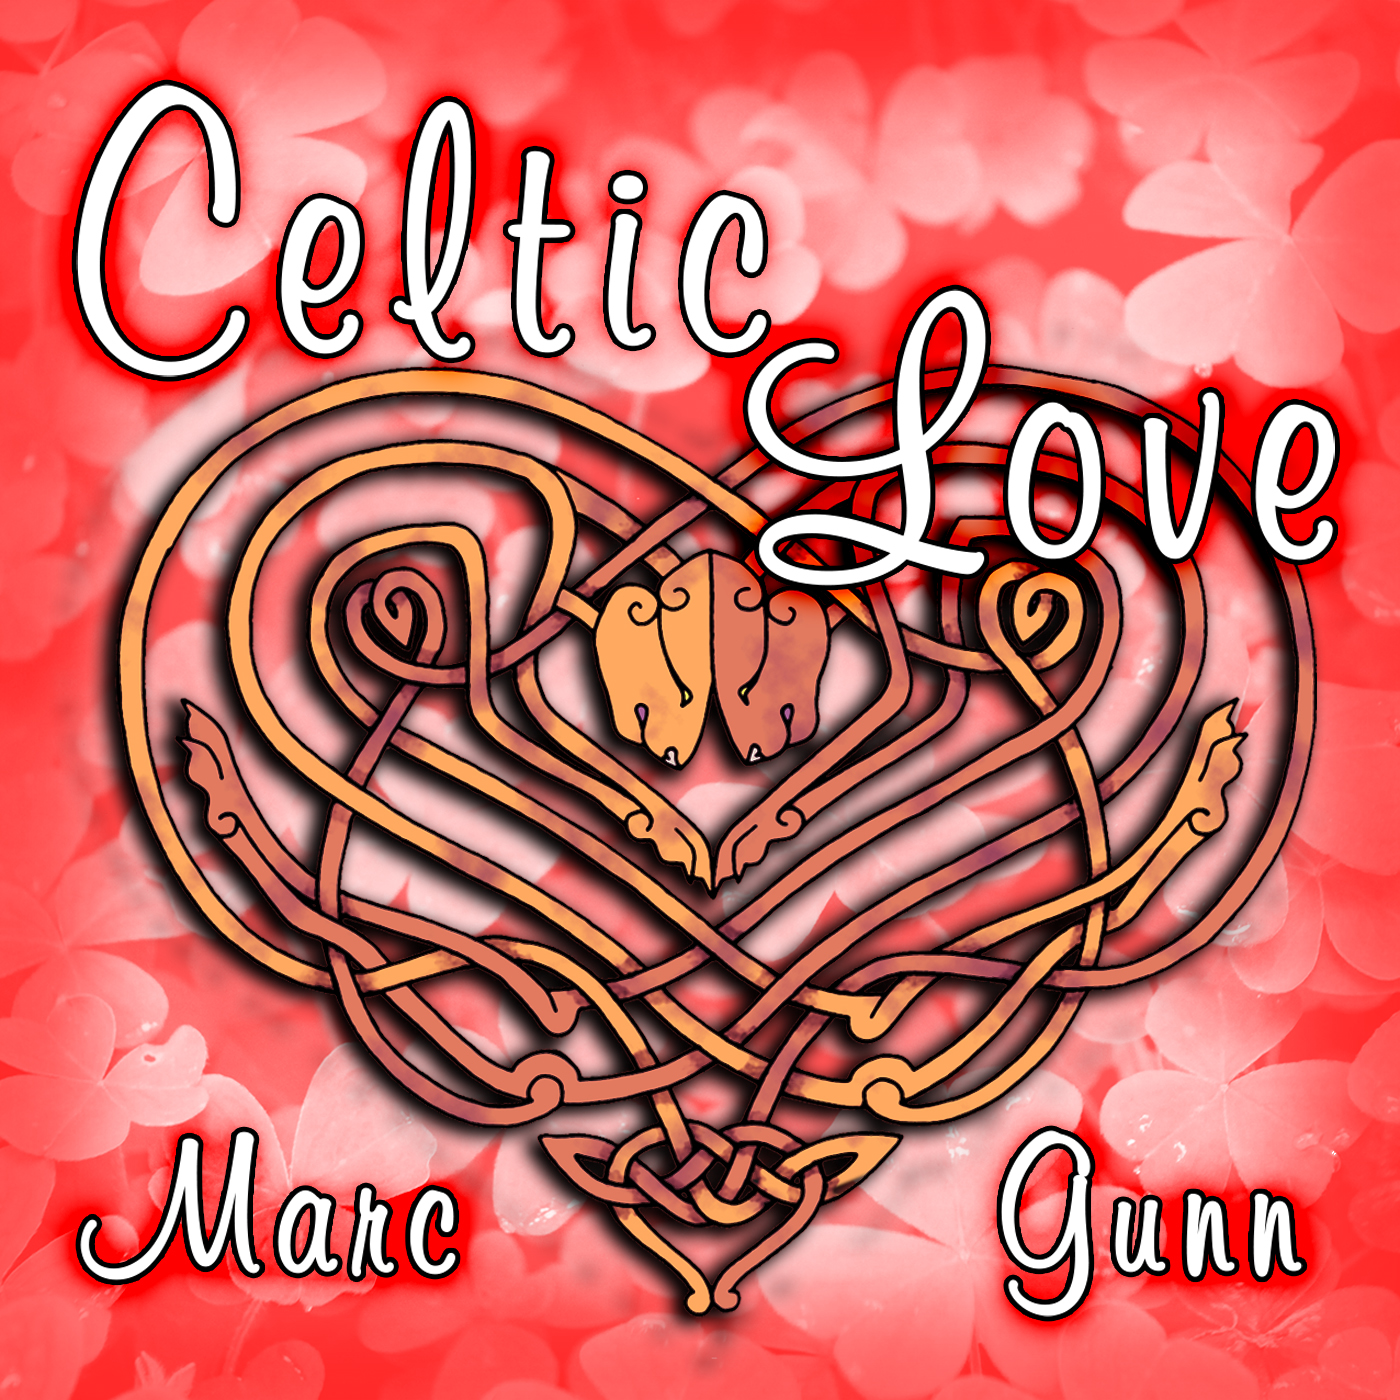 Celtic Love